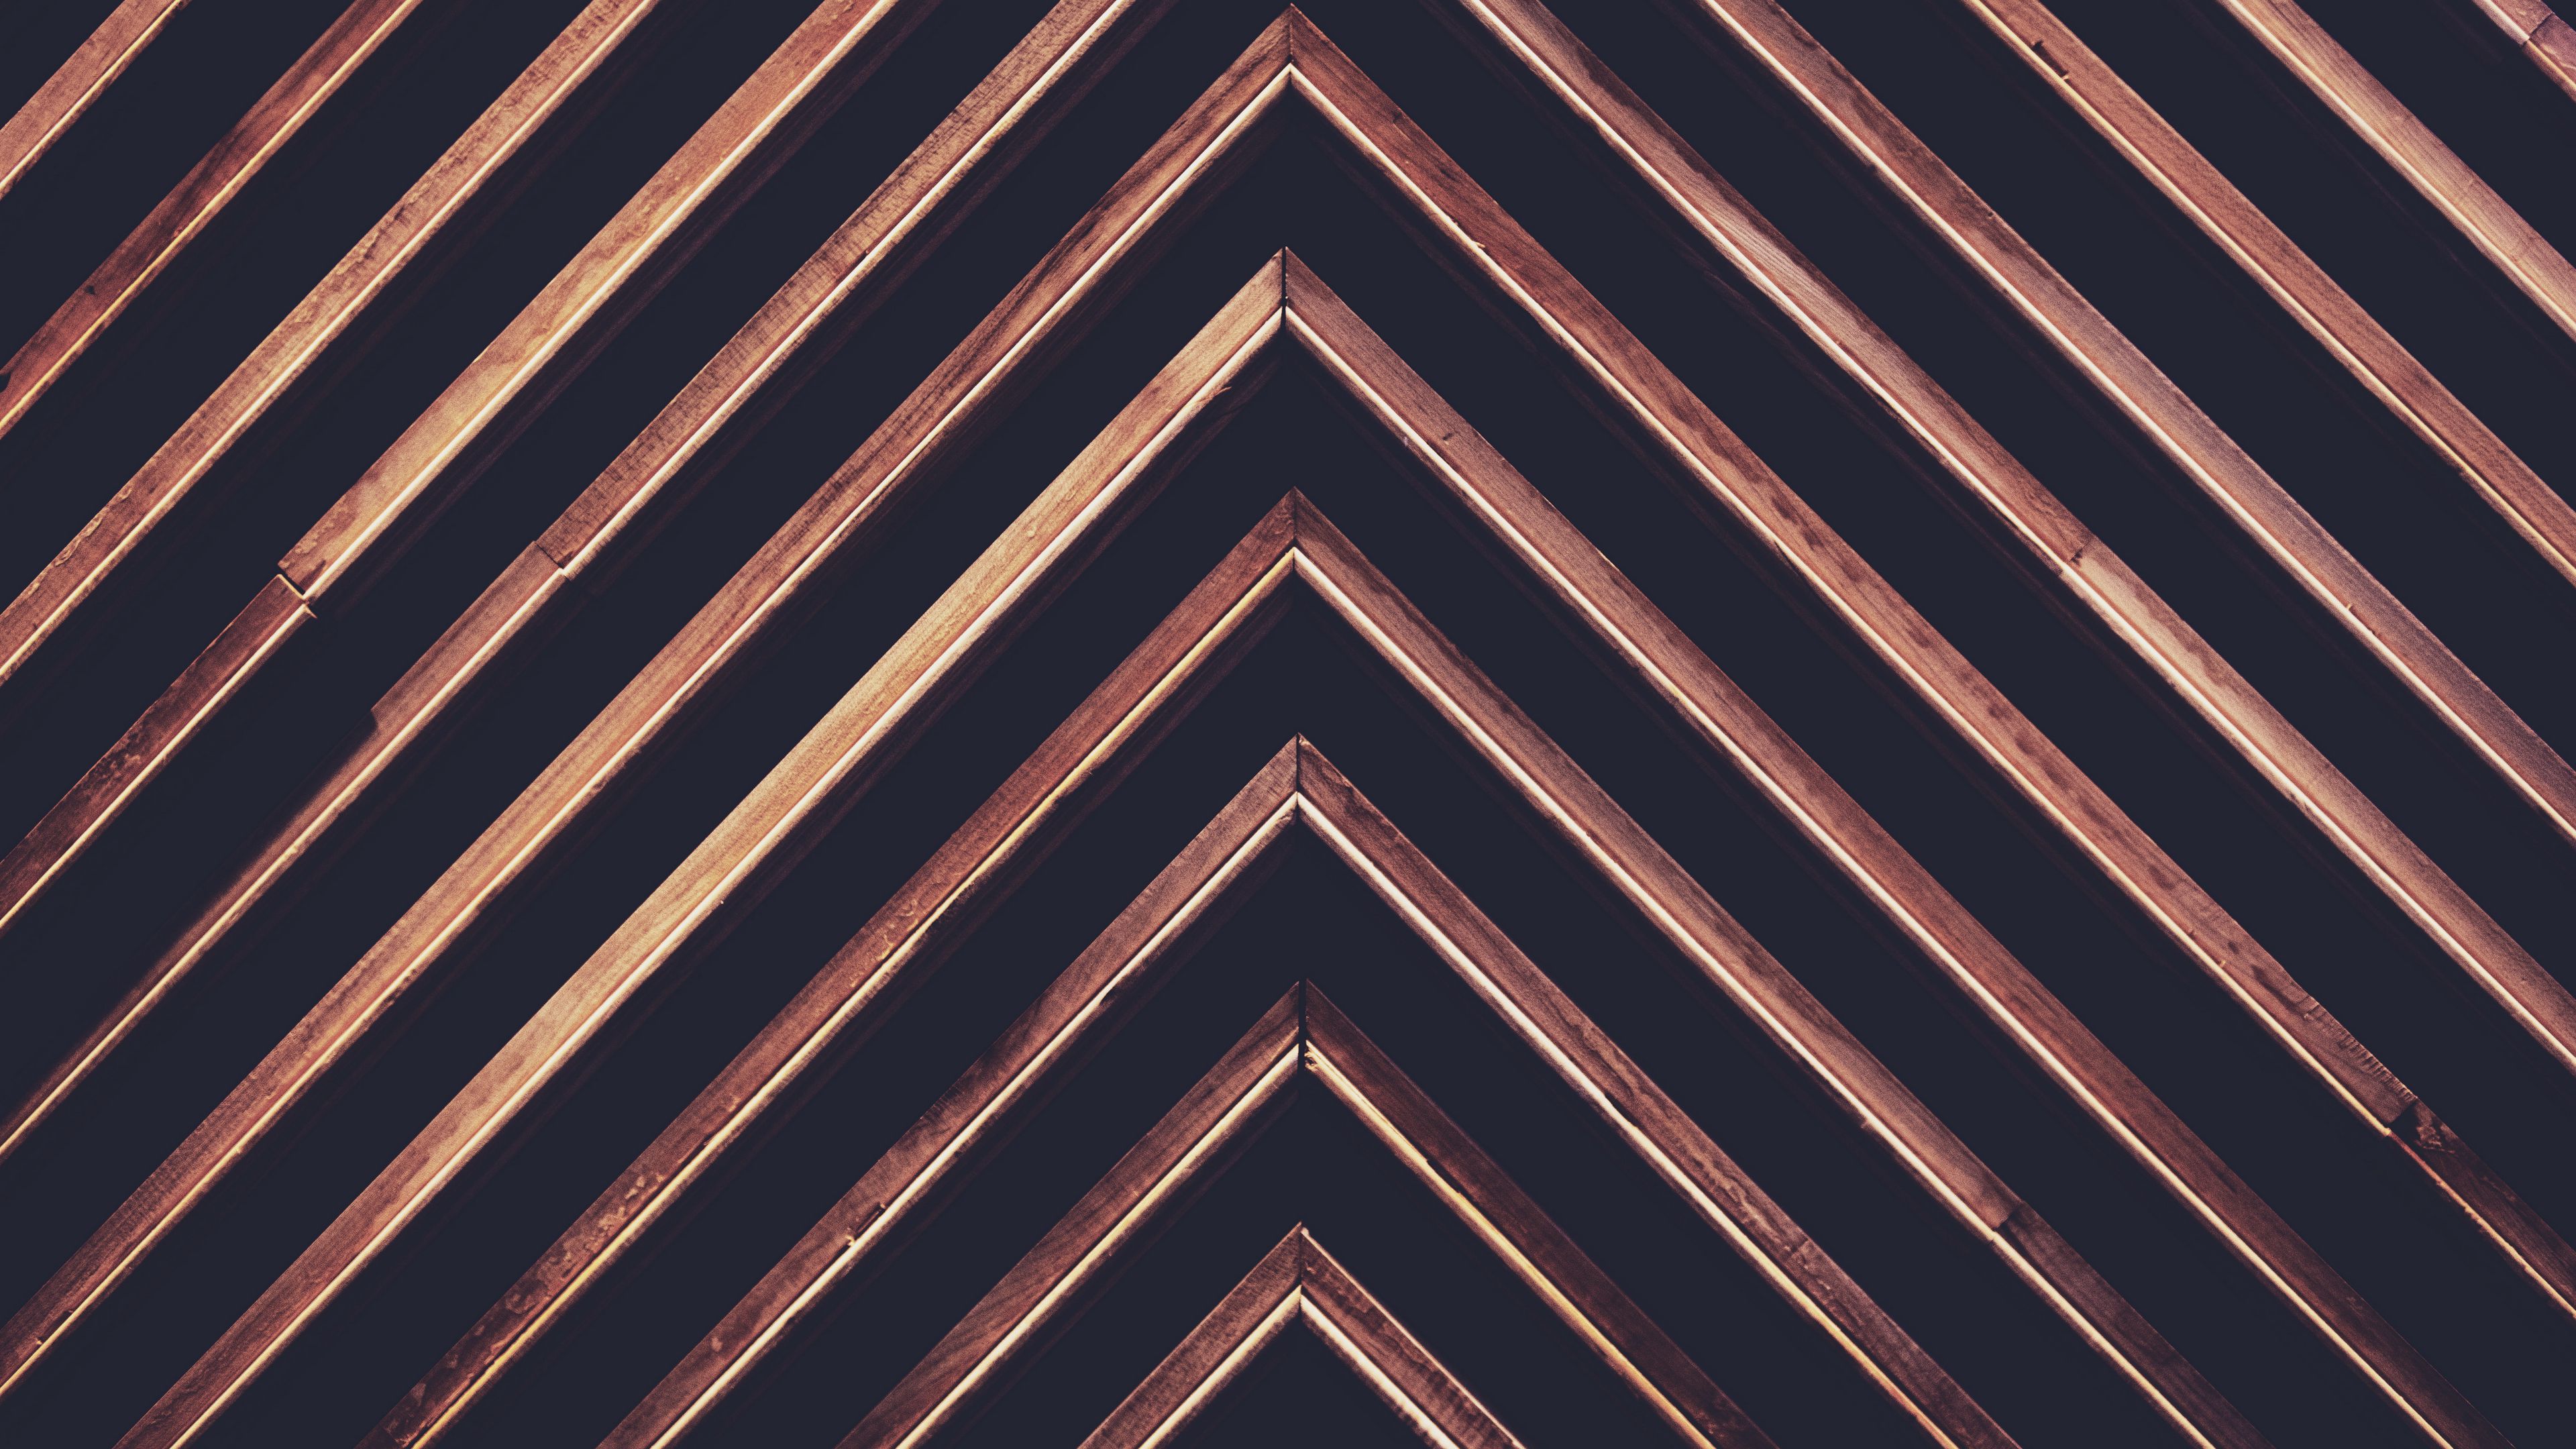 Download Wallpaper 3840x2160 Texture Symmetry Wooden Lines 4k Uhd 16